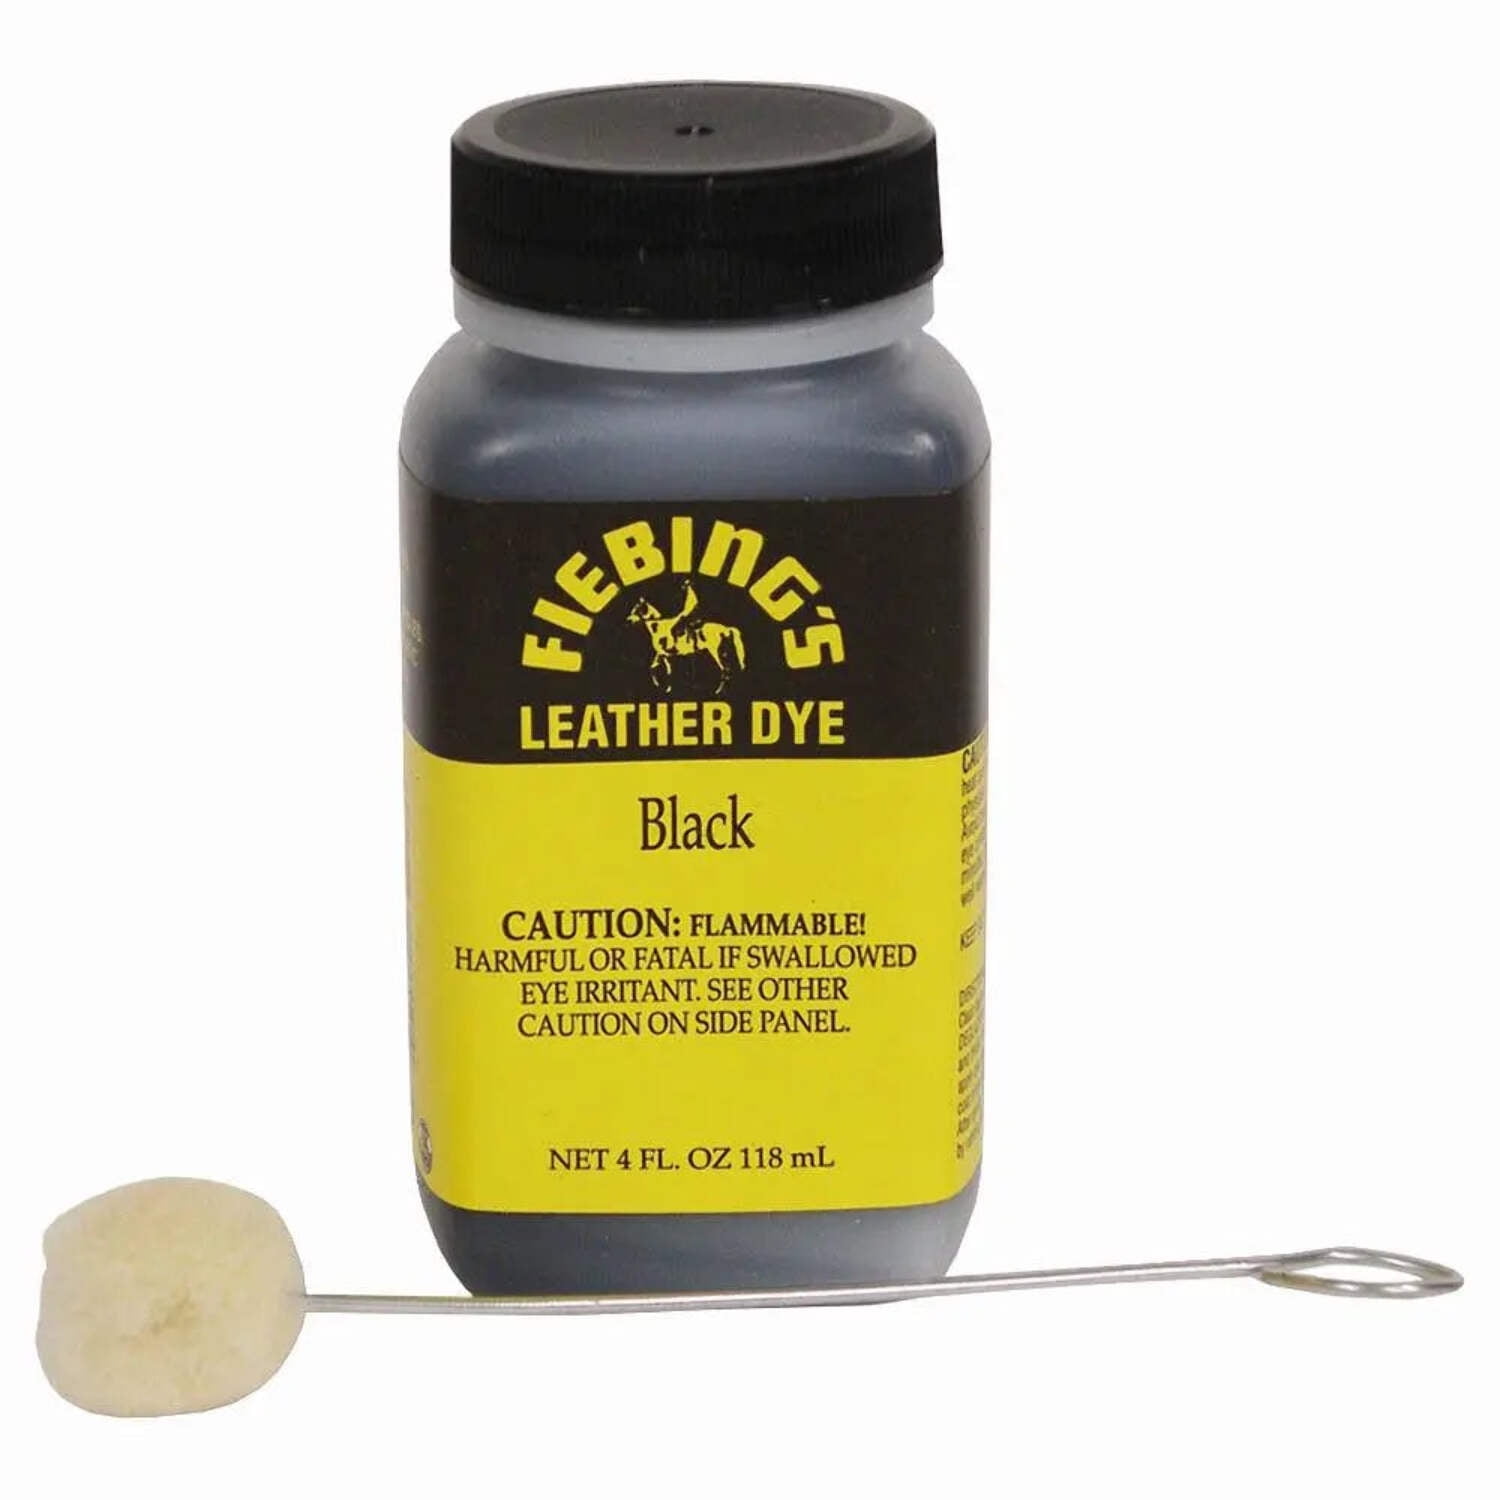 Black - Leather Dye Kit from Hessen Antique